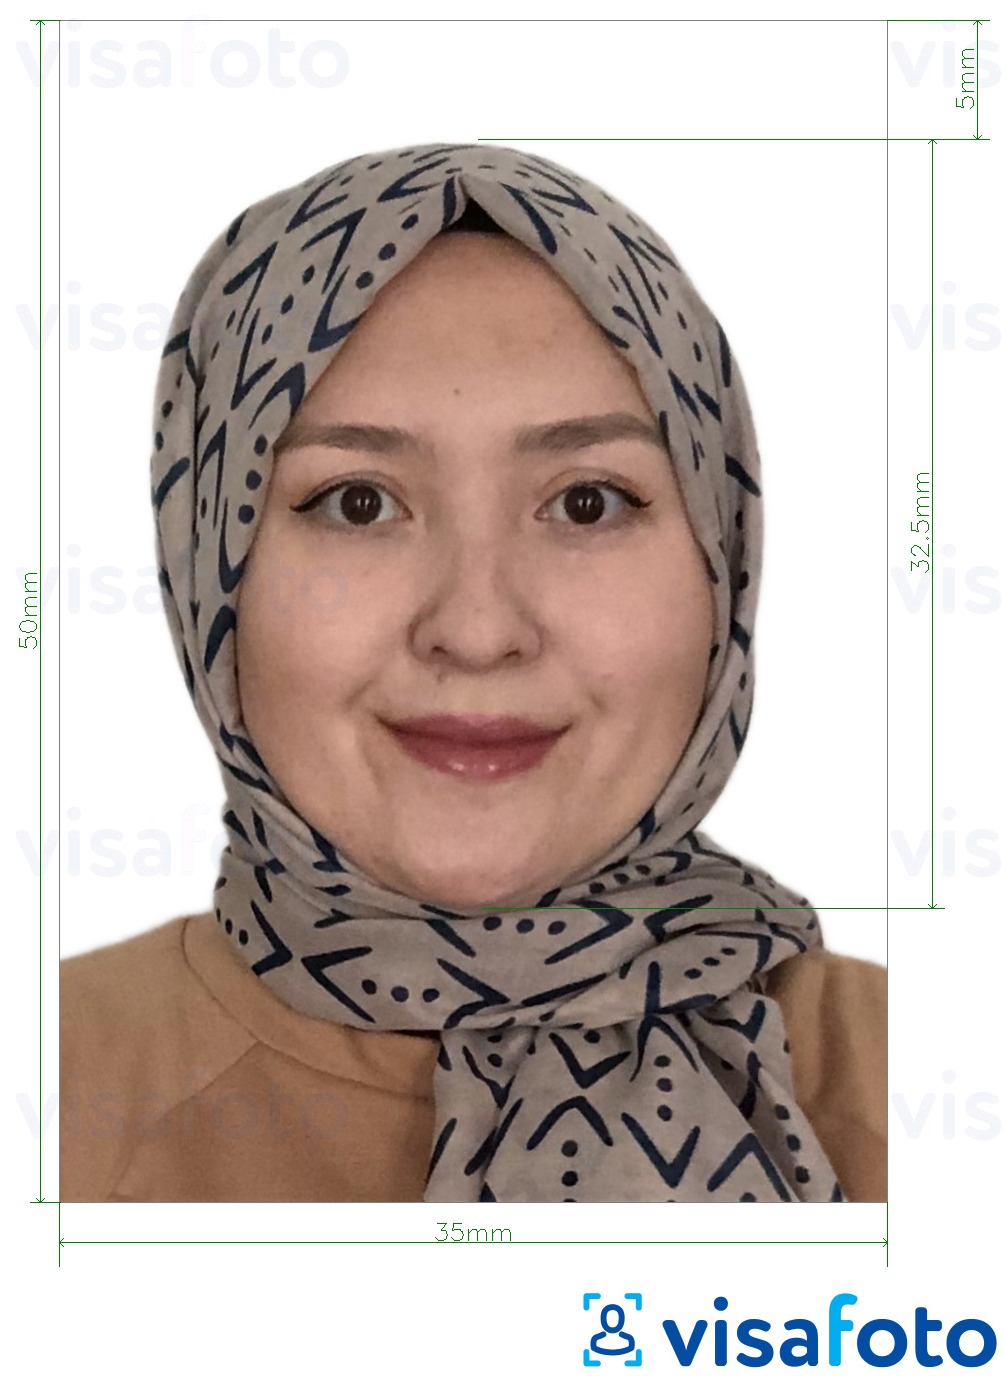 Malaysia electronic visa photo